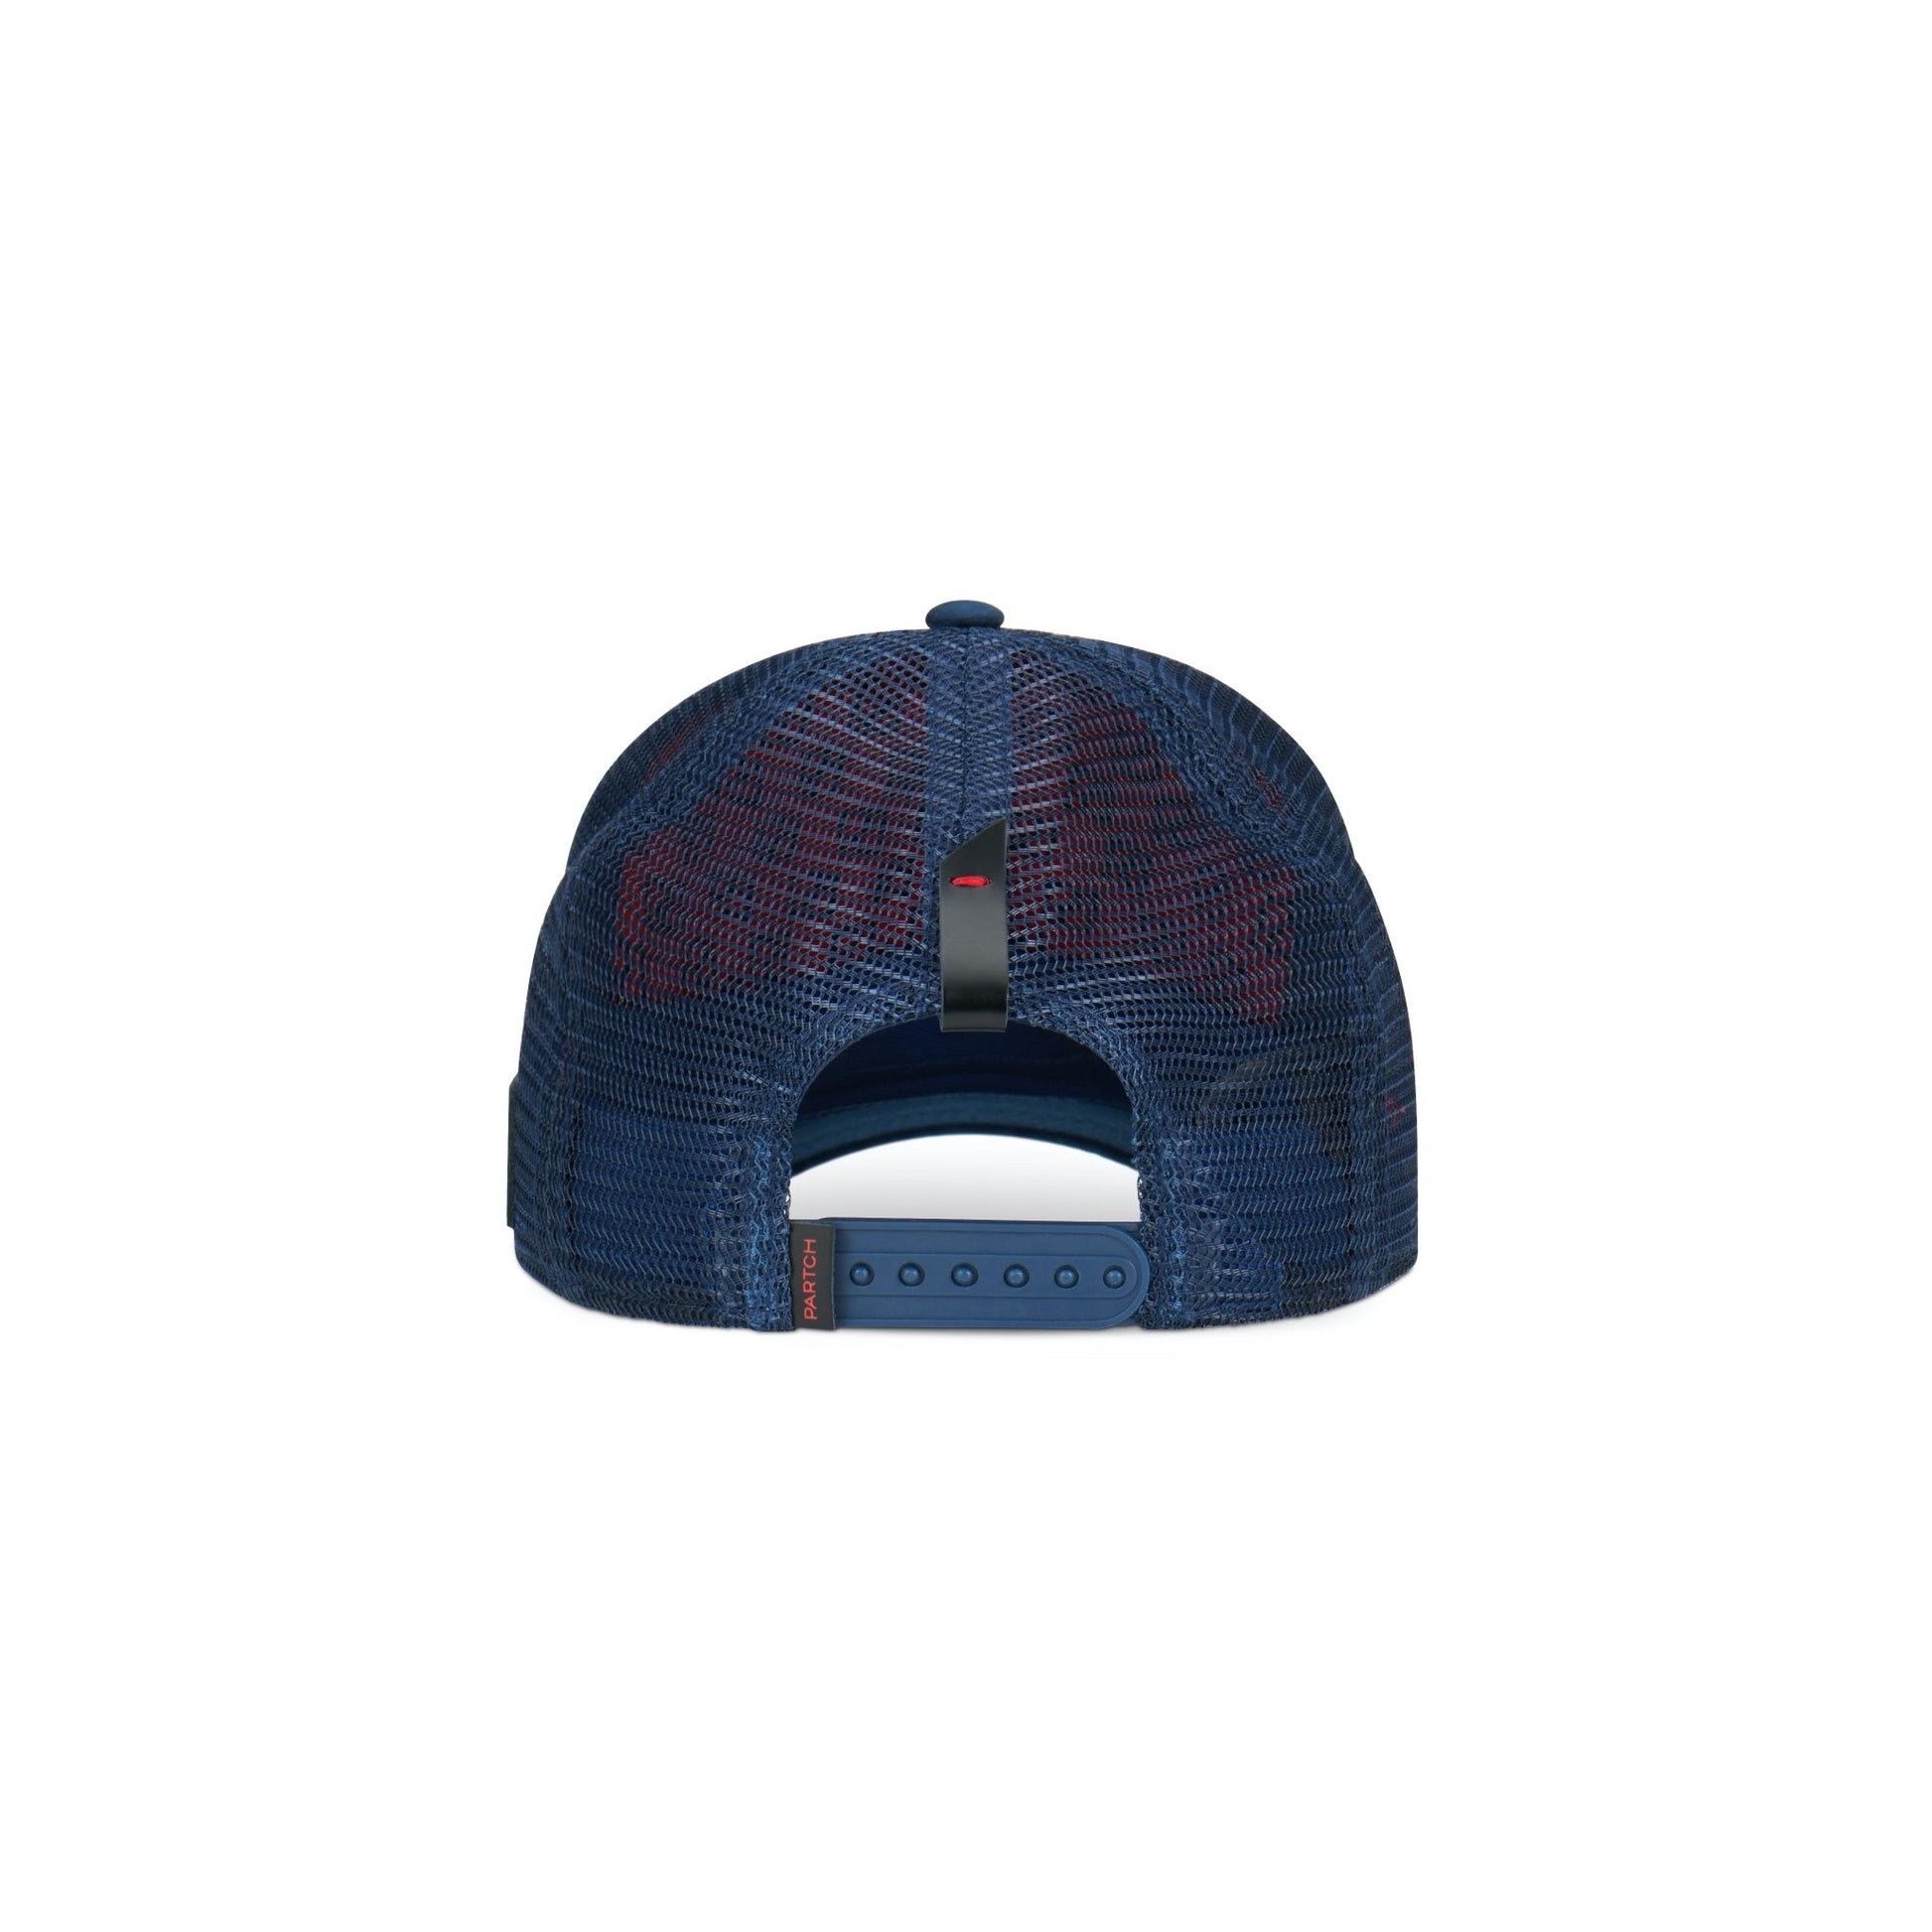 Partch Trucker Hat Navy Blue with PARTCH-Clip Unixvi Back View